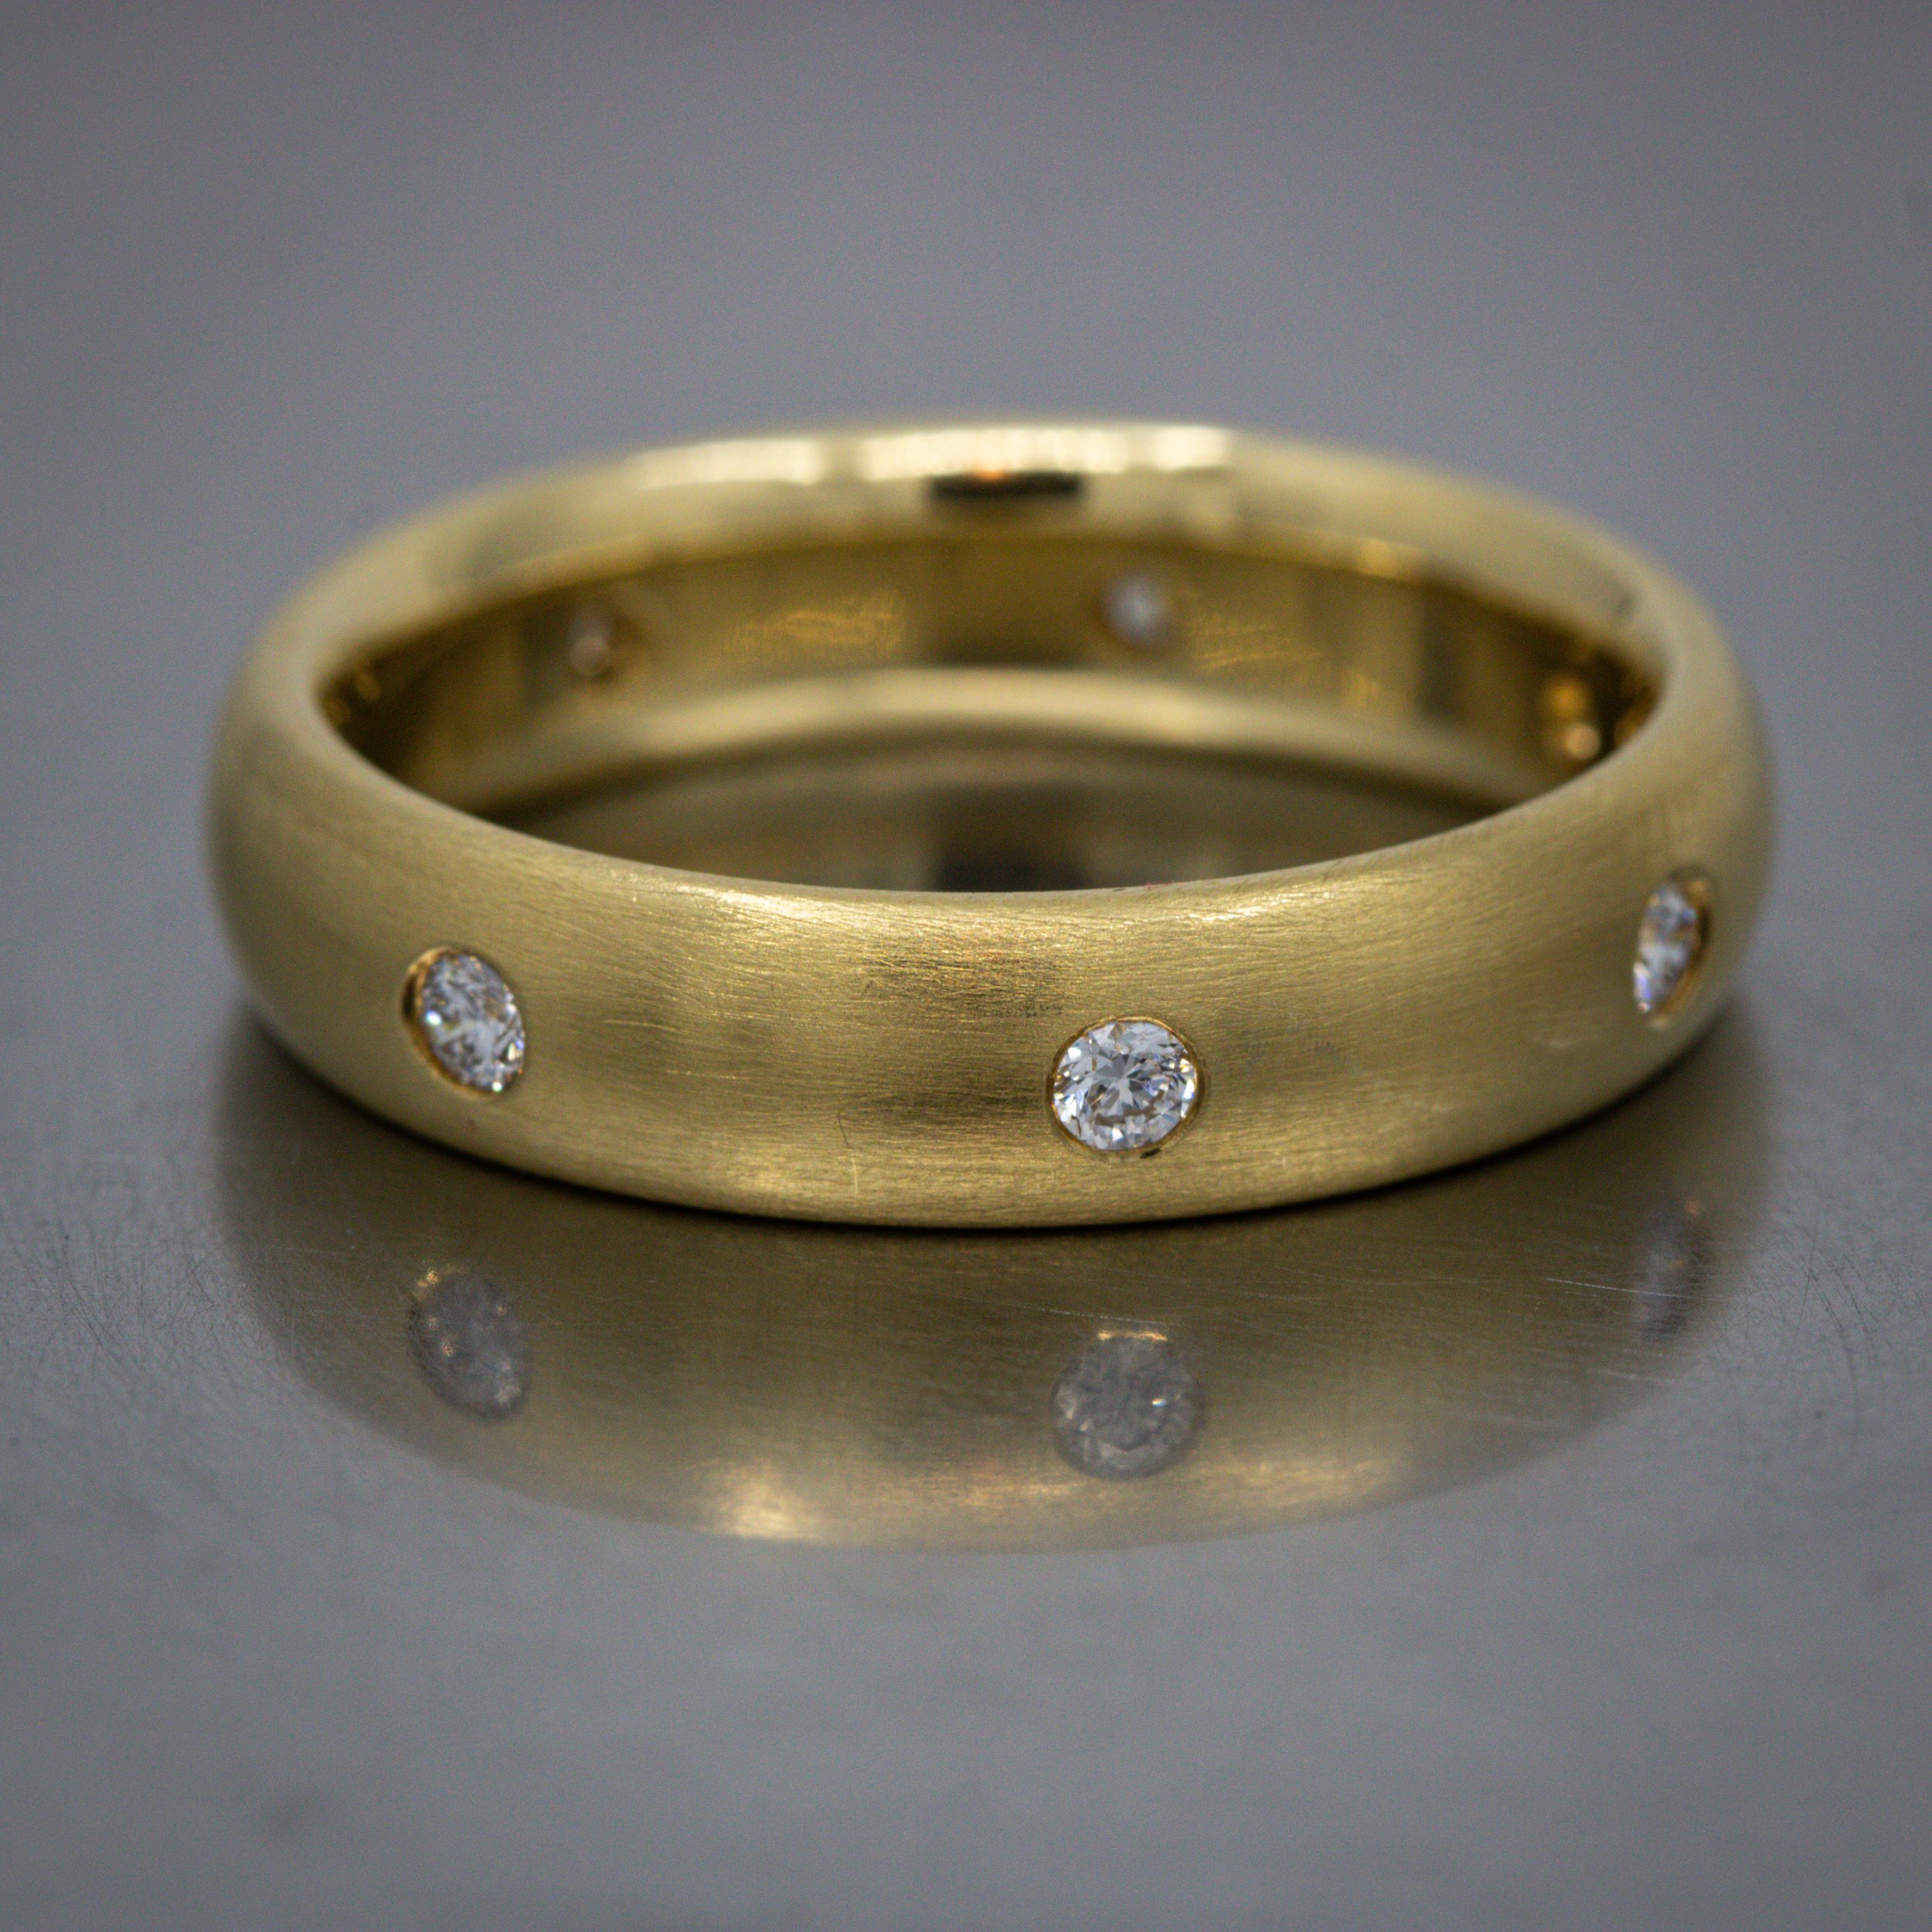 Shop — Rings True Custom Jewelry